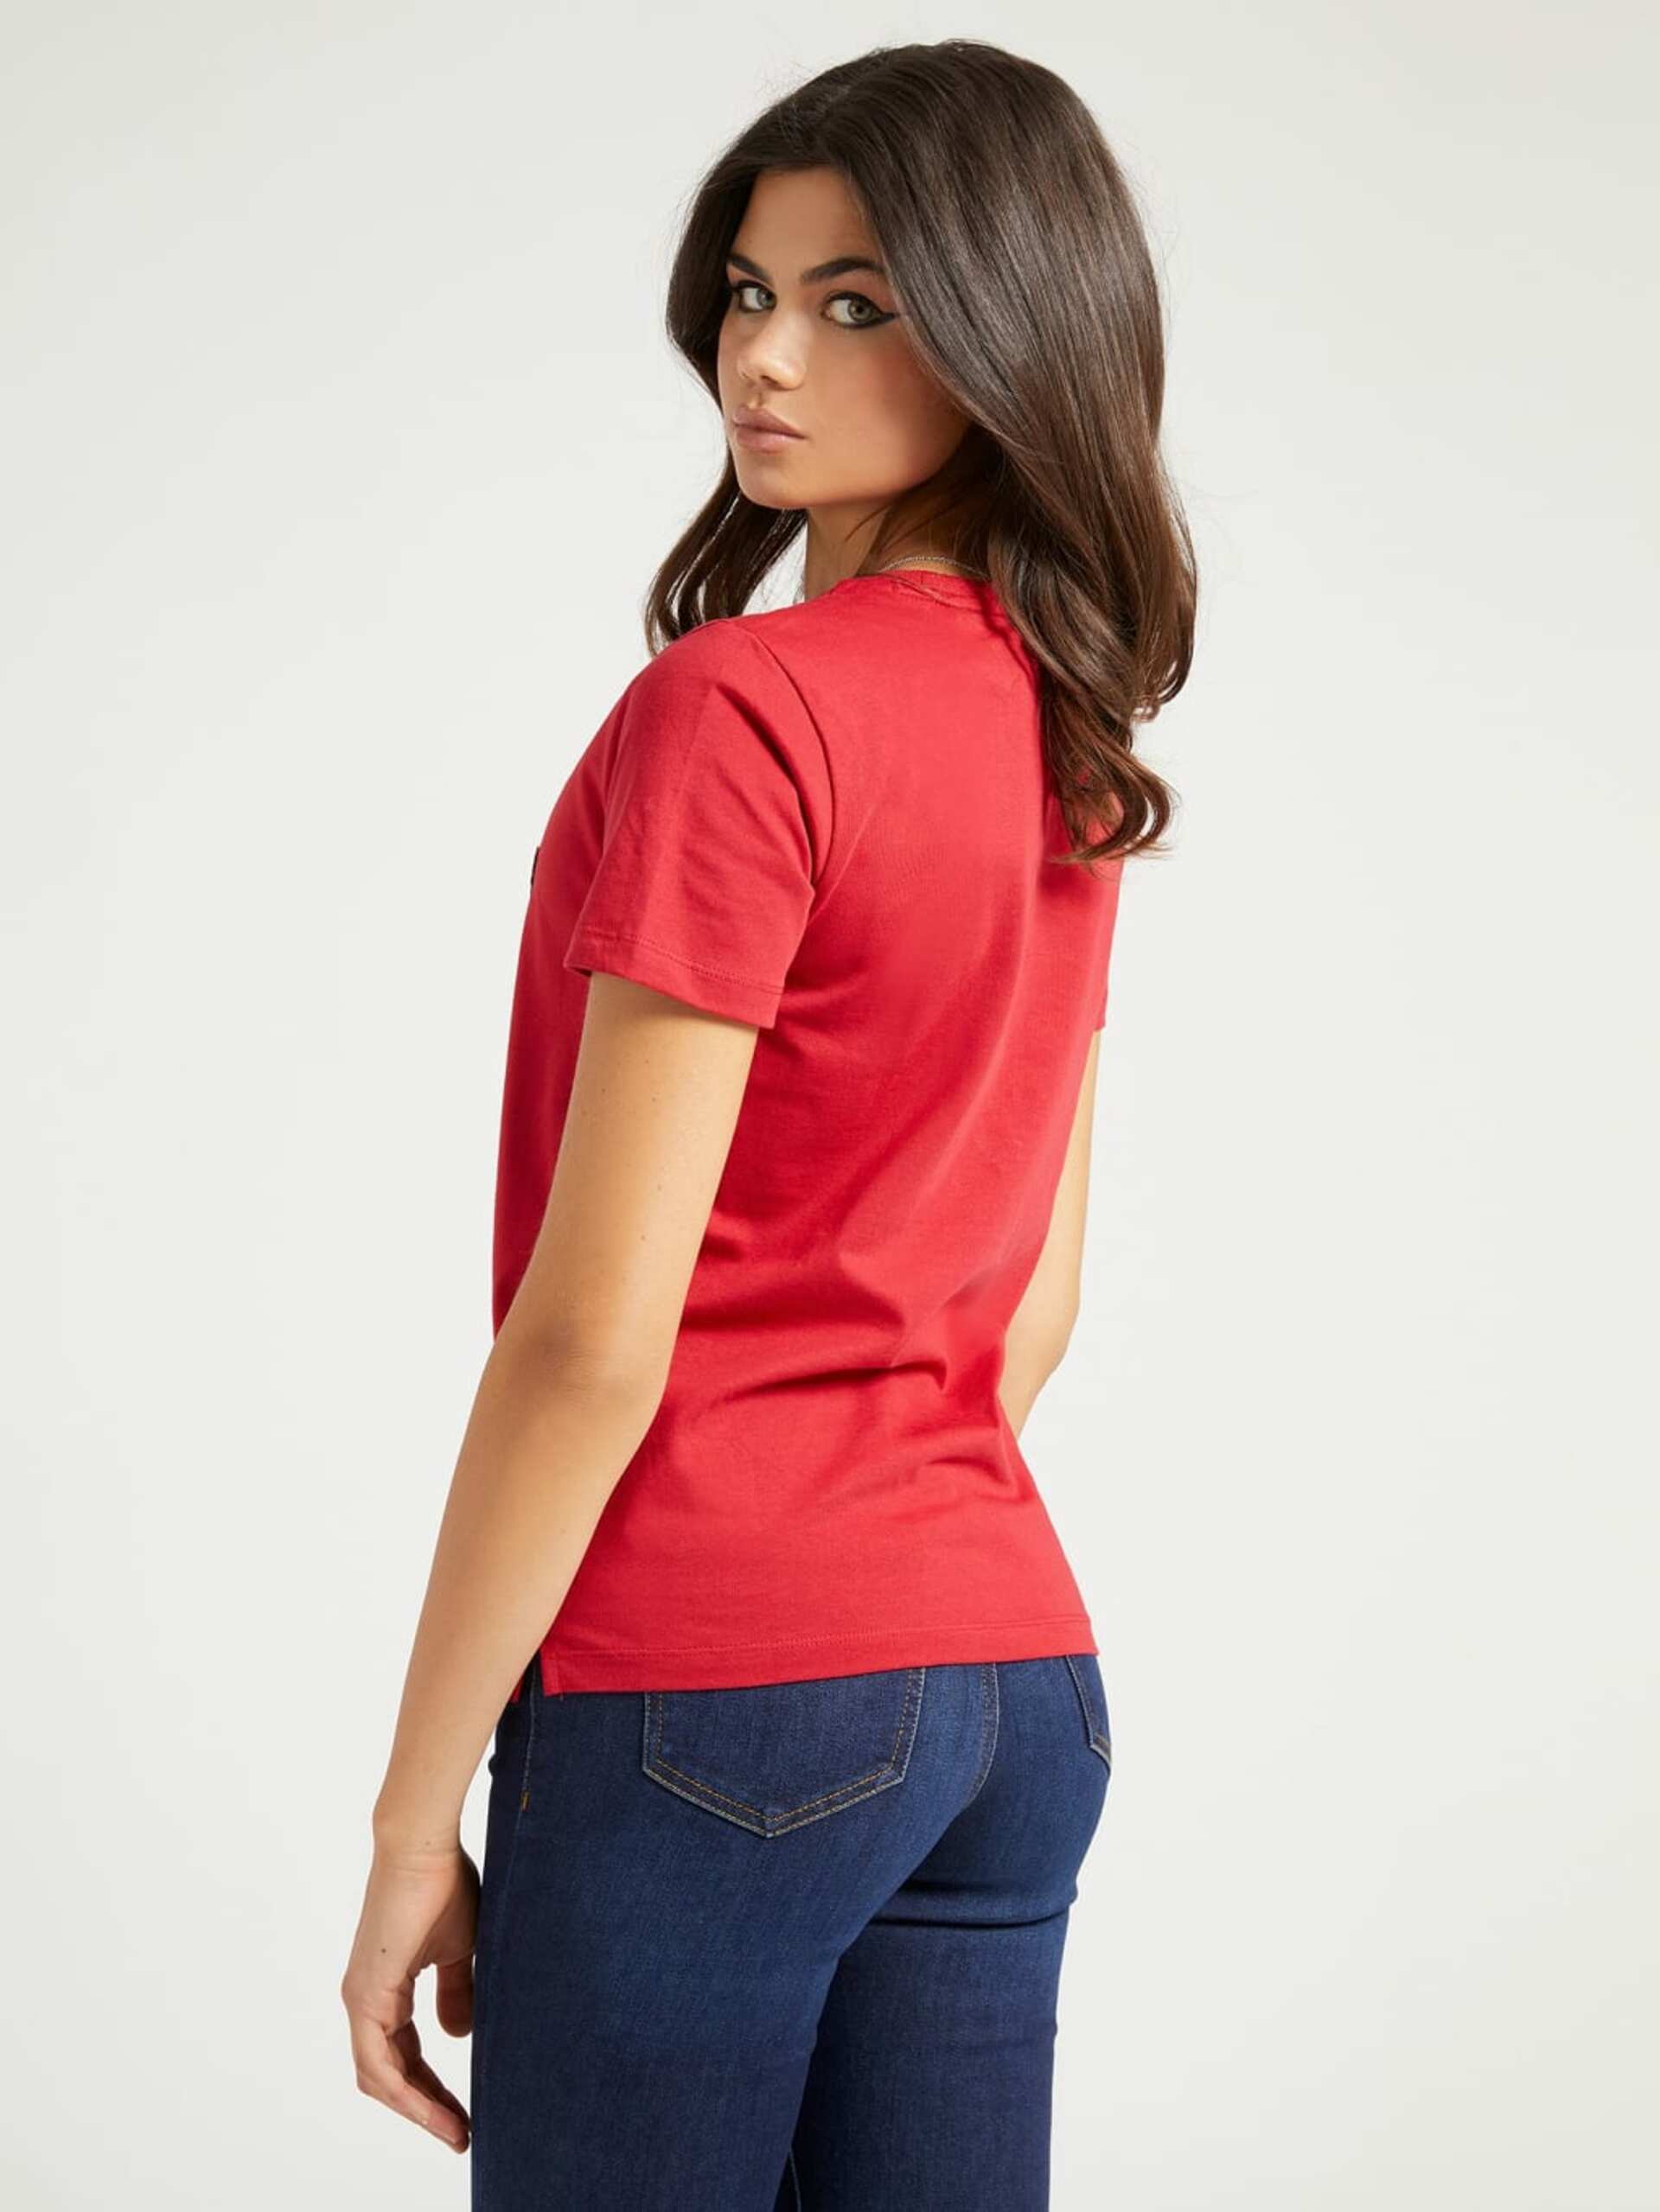 Guess dámské červené tričko - XS (G5Q9)